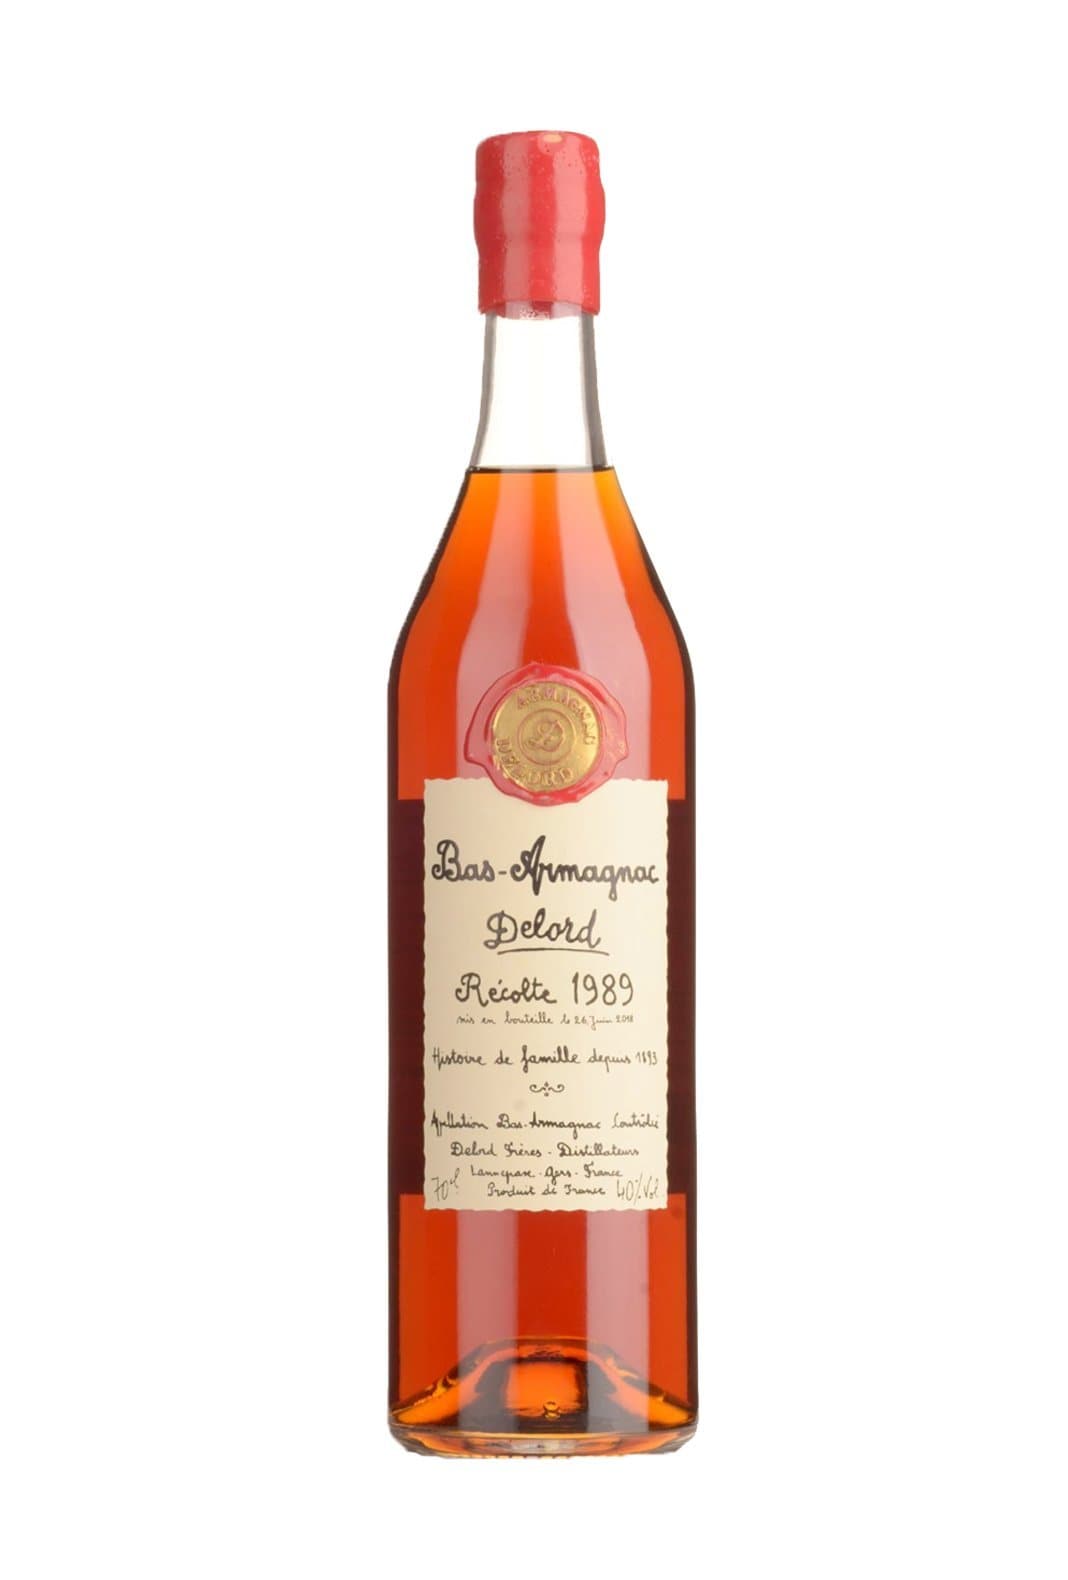 Delord 1989 Bas Armagnac 40% 700ml | Brandy | Shop online at Spirits of France